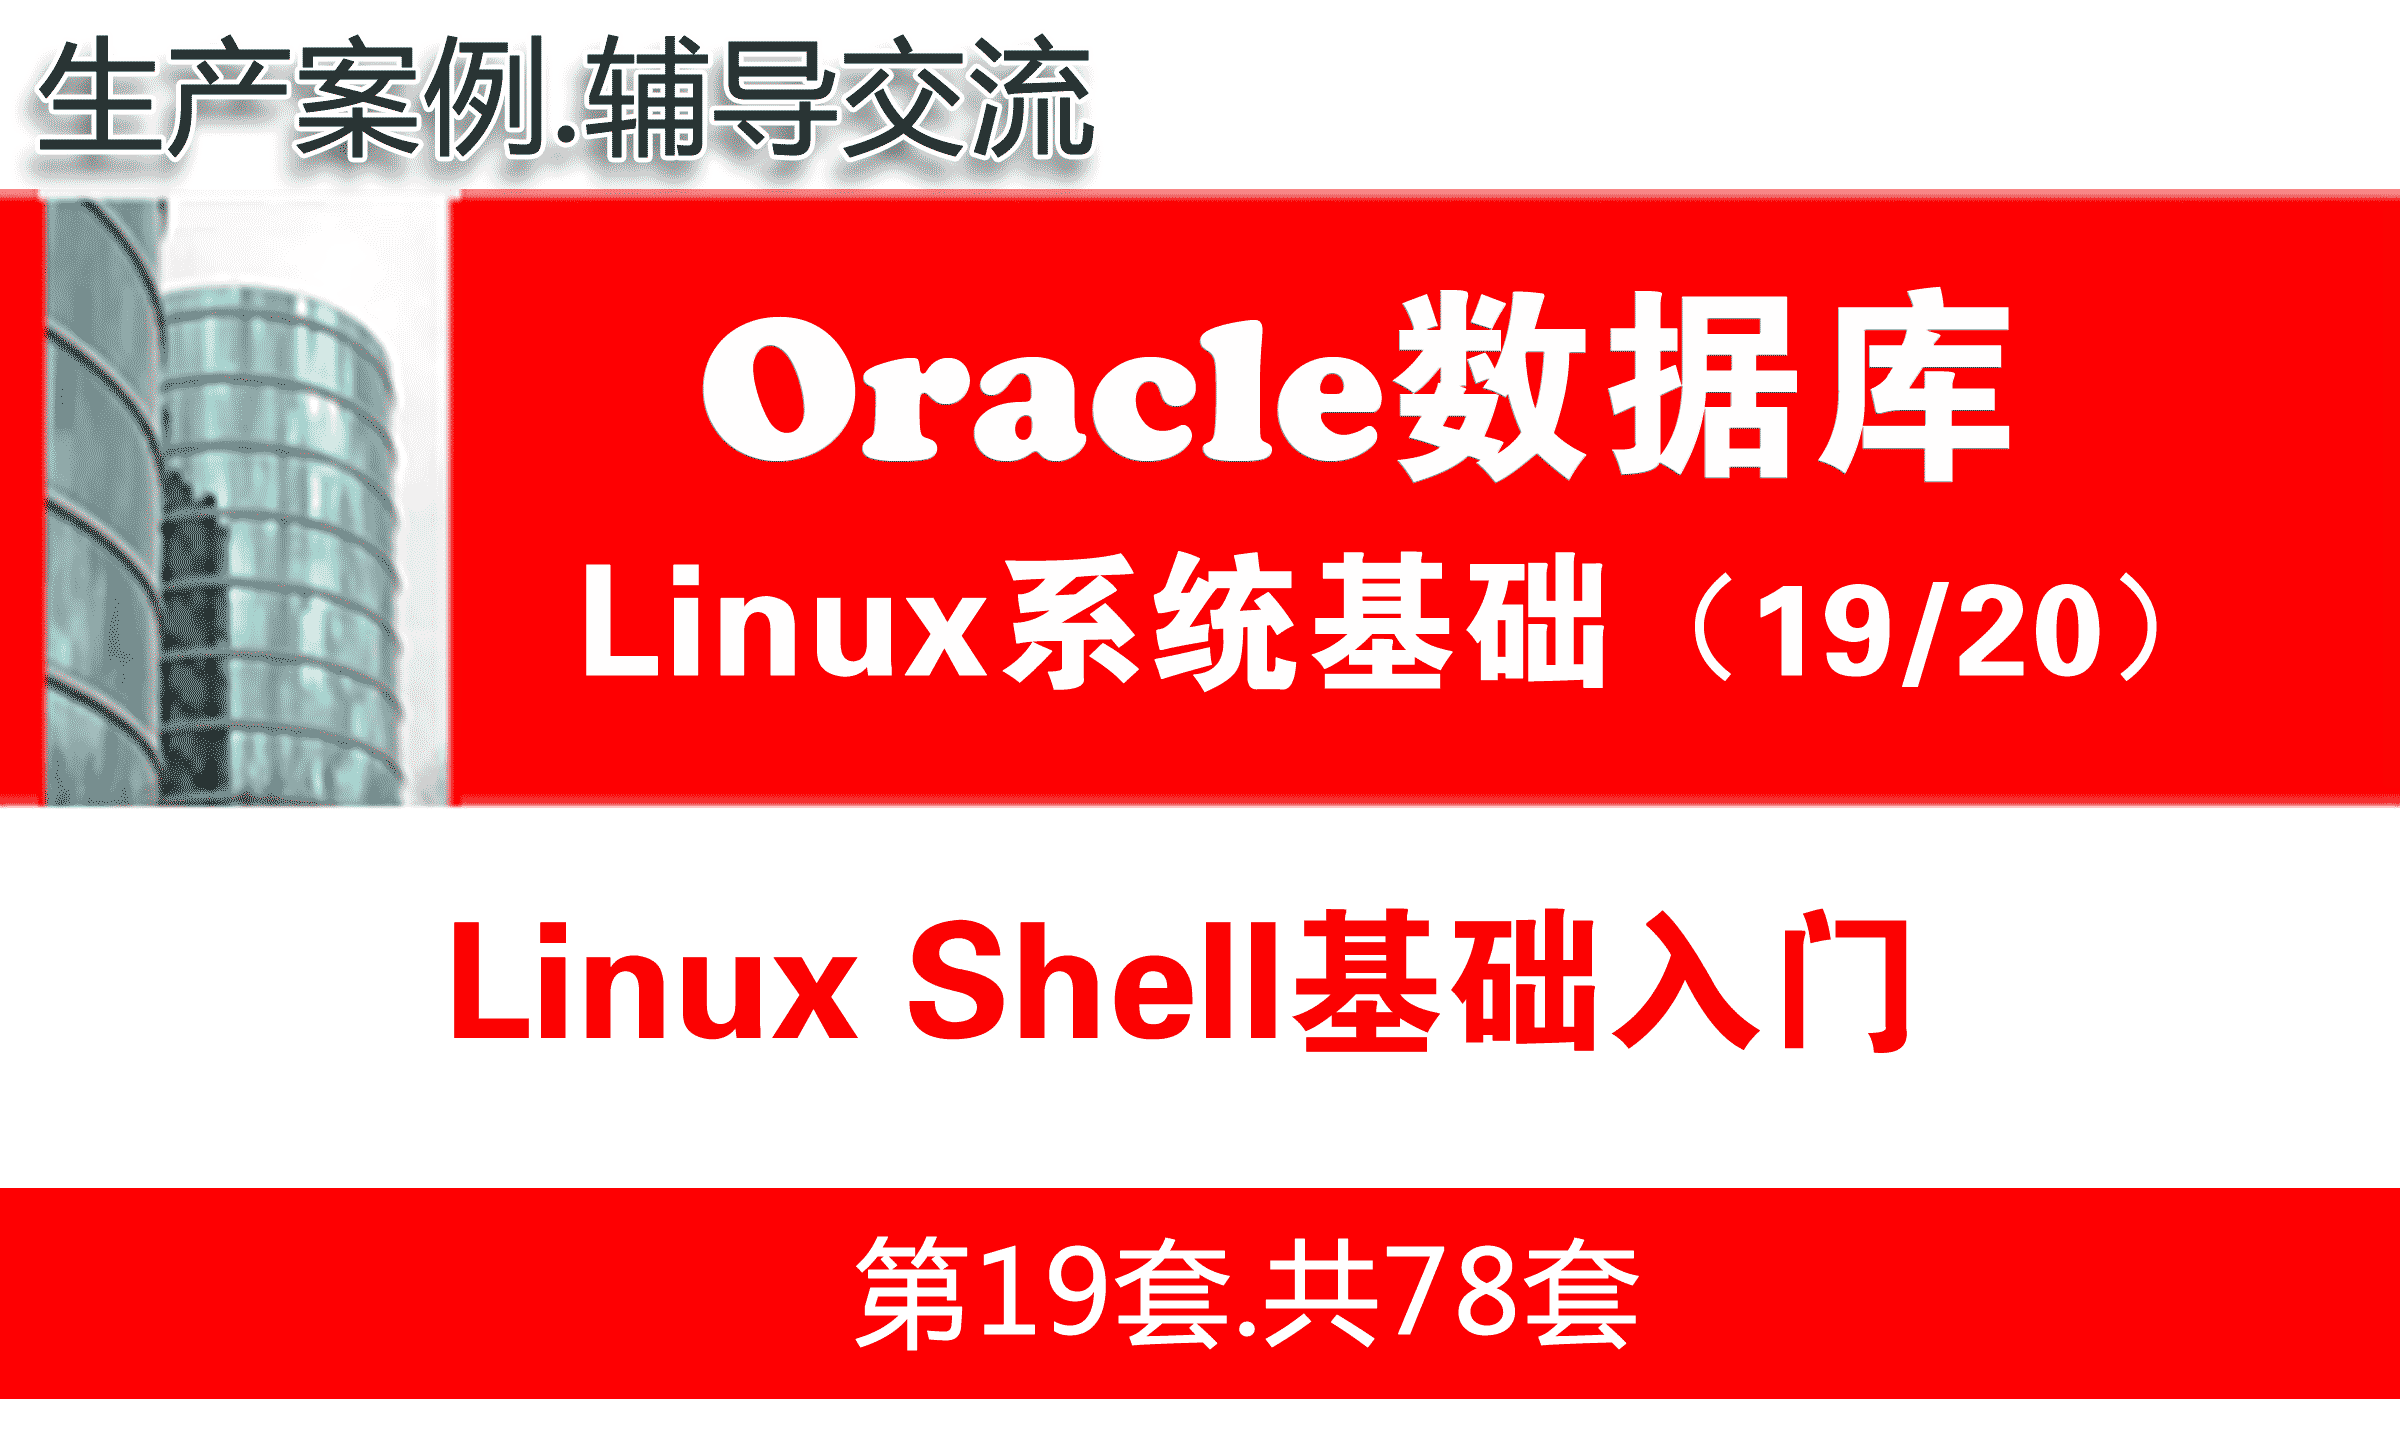 Linux Shell基础入门_Oracle数据库入门培训视频19